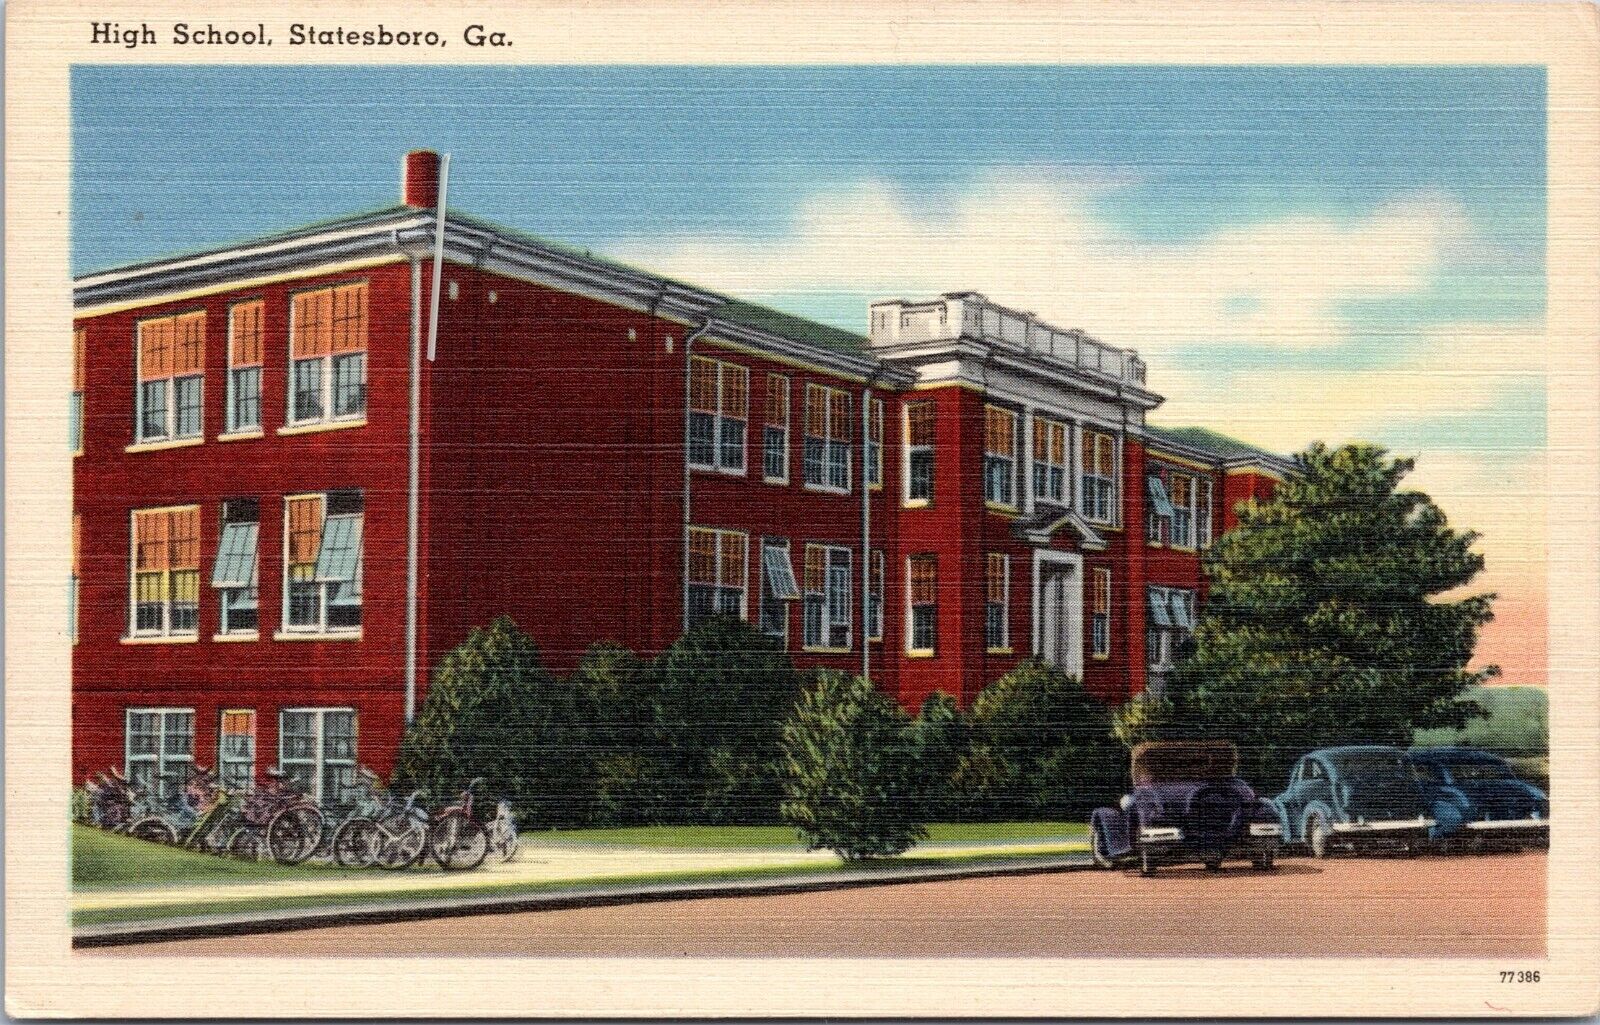 High School, Statesboro, Georgia- Vintage Linen Postcard - Old Cars, bicycles